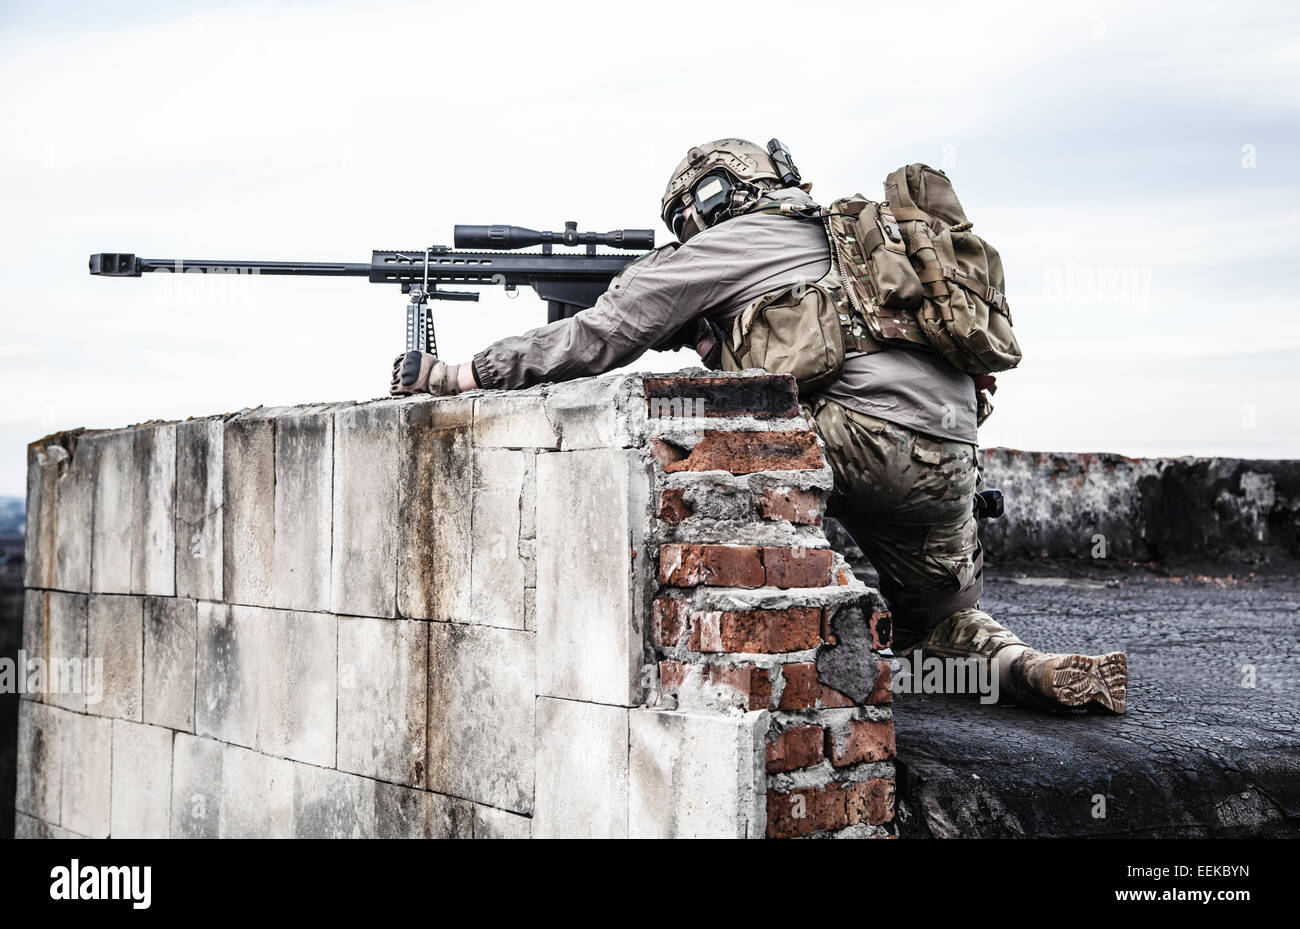 U.S. Army sniper Stock Photo